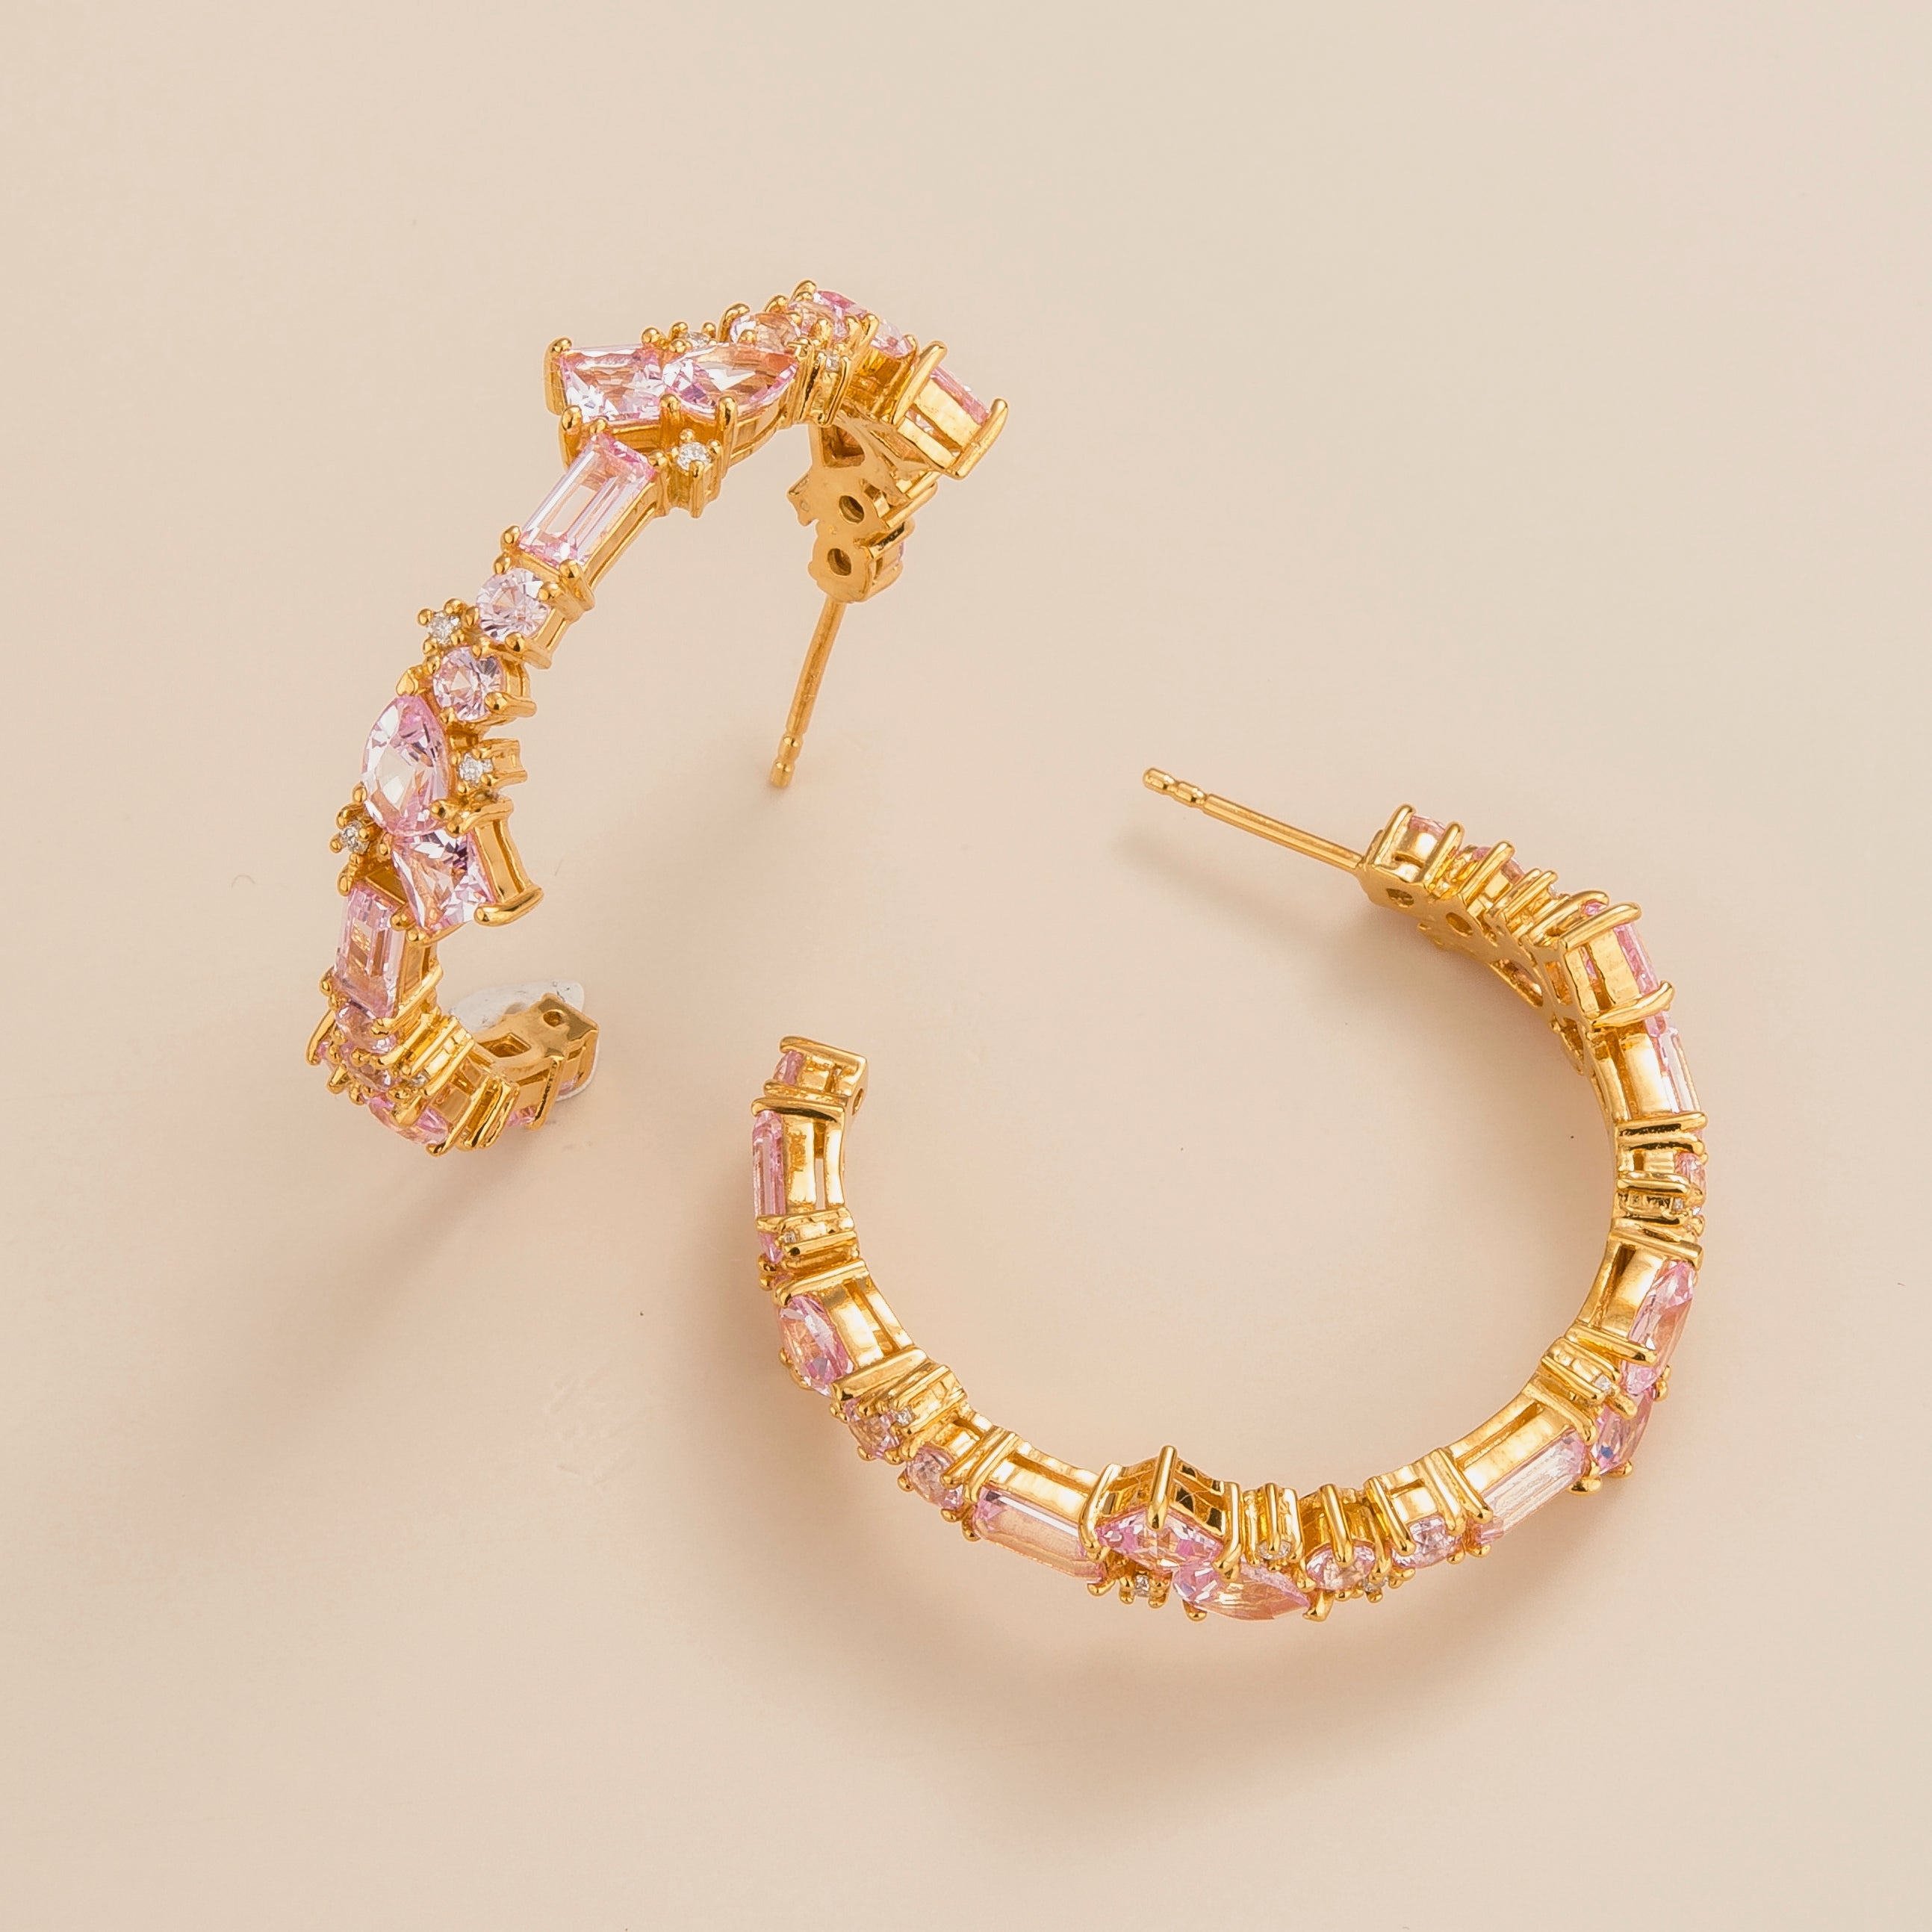 Lanna large hoop earrings in 18K gold vermeil set with lab grown diamond and pink sapphire gem stones.